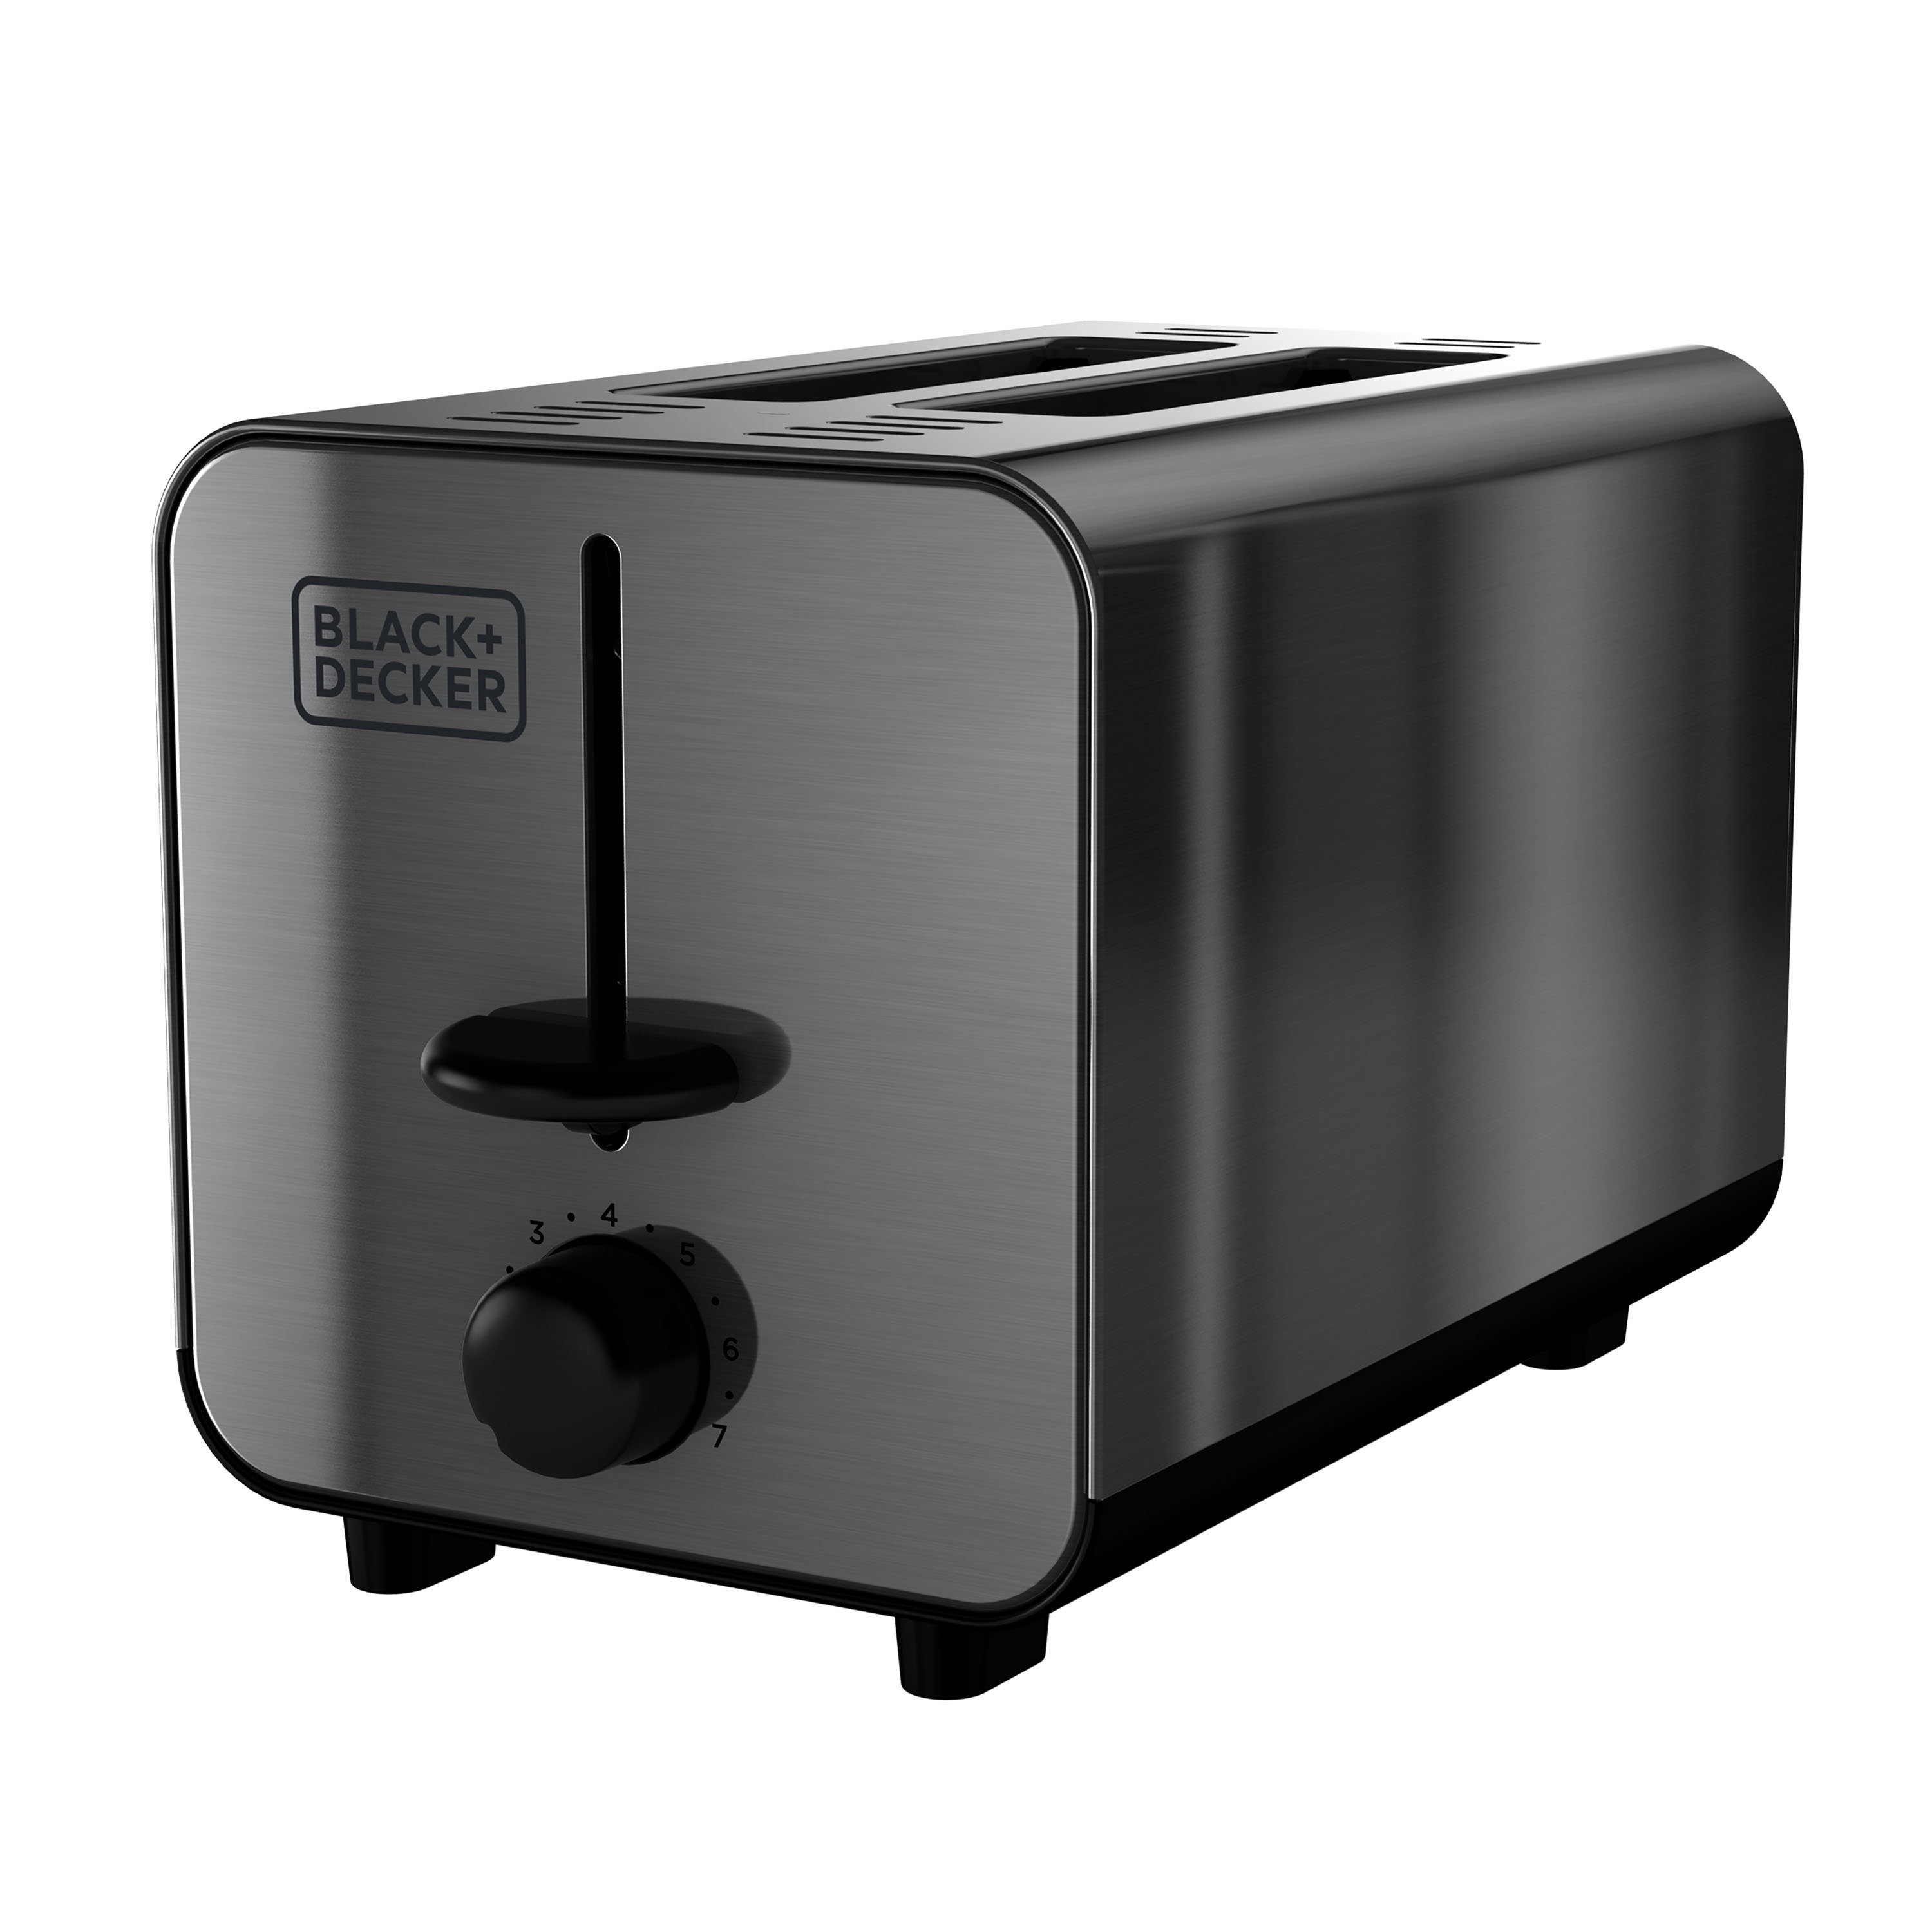 Ninja Foodi 2-in-1 Flip Toaster-2-Slice Toaster-Compact Toaster